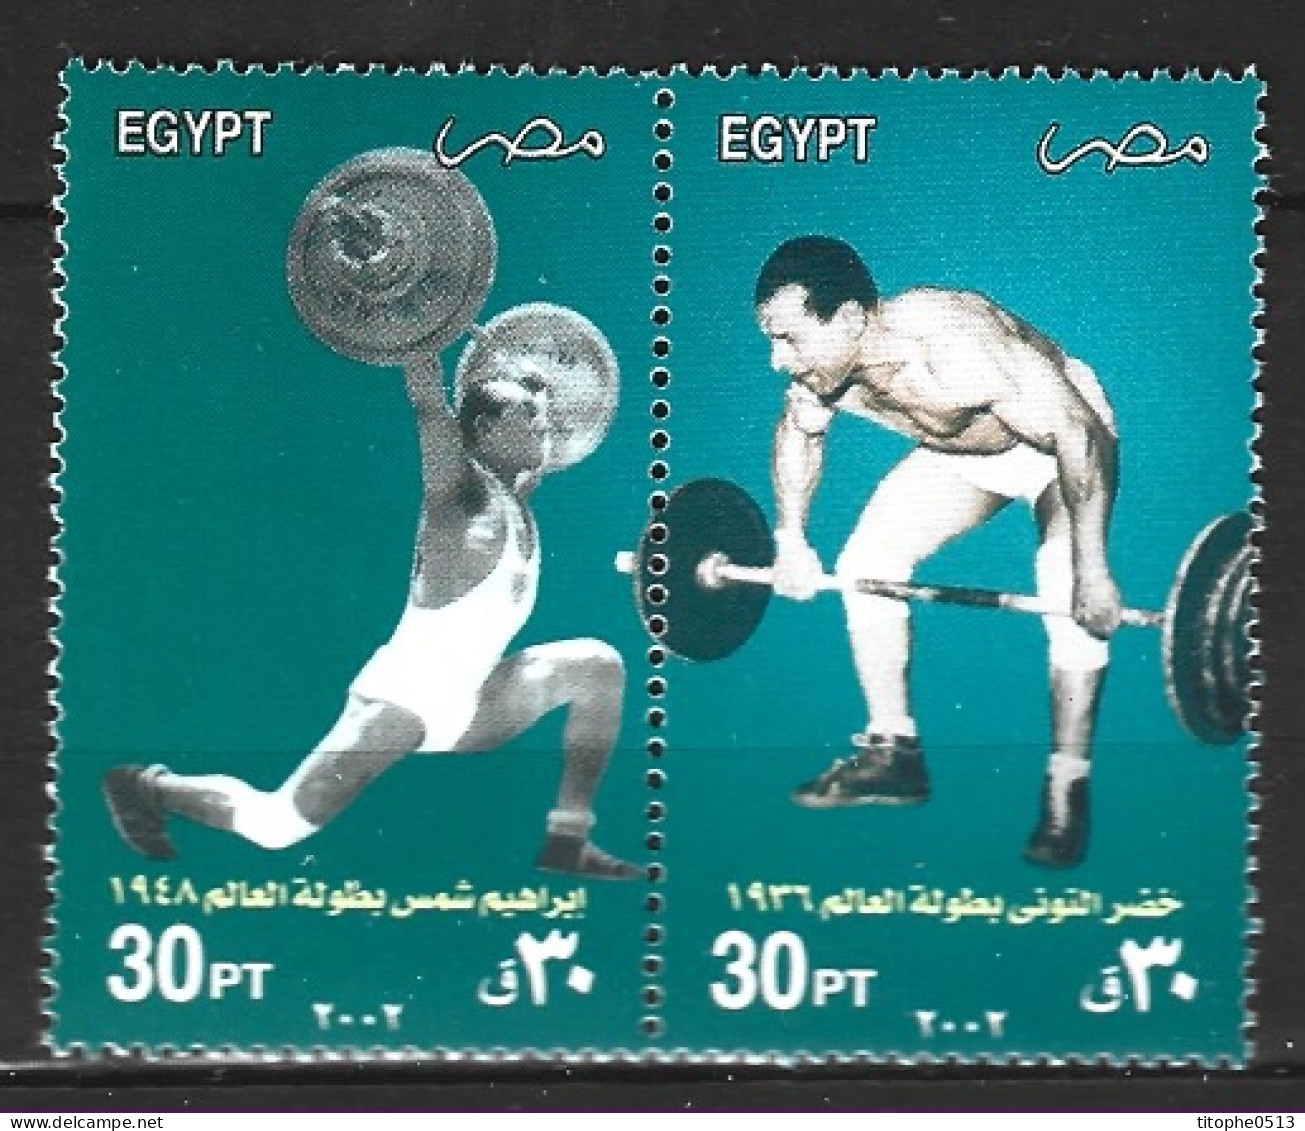 EGYPTE. N°1724-5 De 2002. Haltérophilie. - Haltérophilie